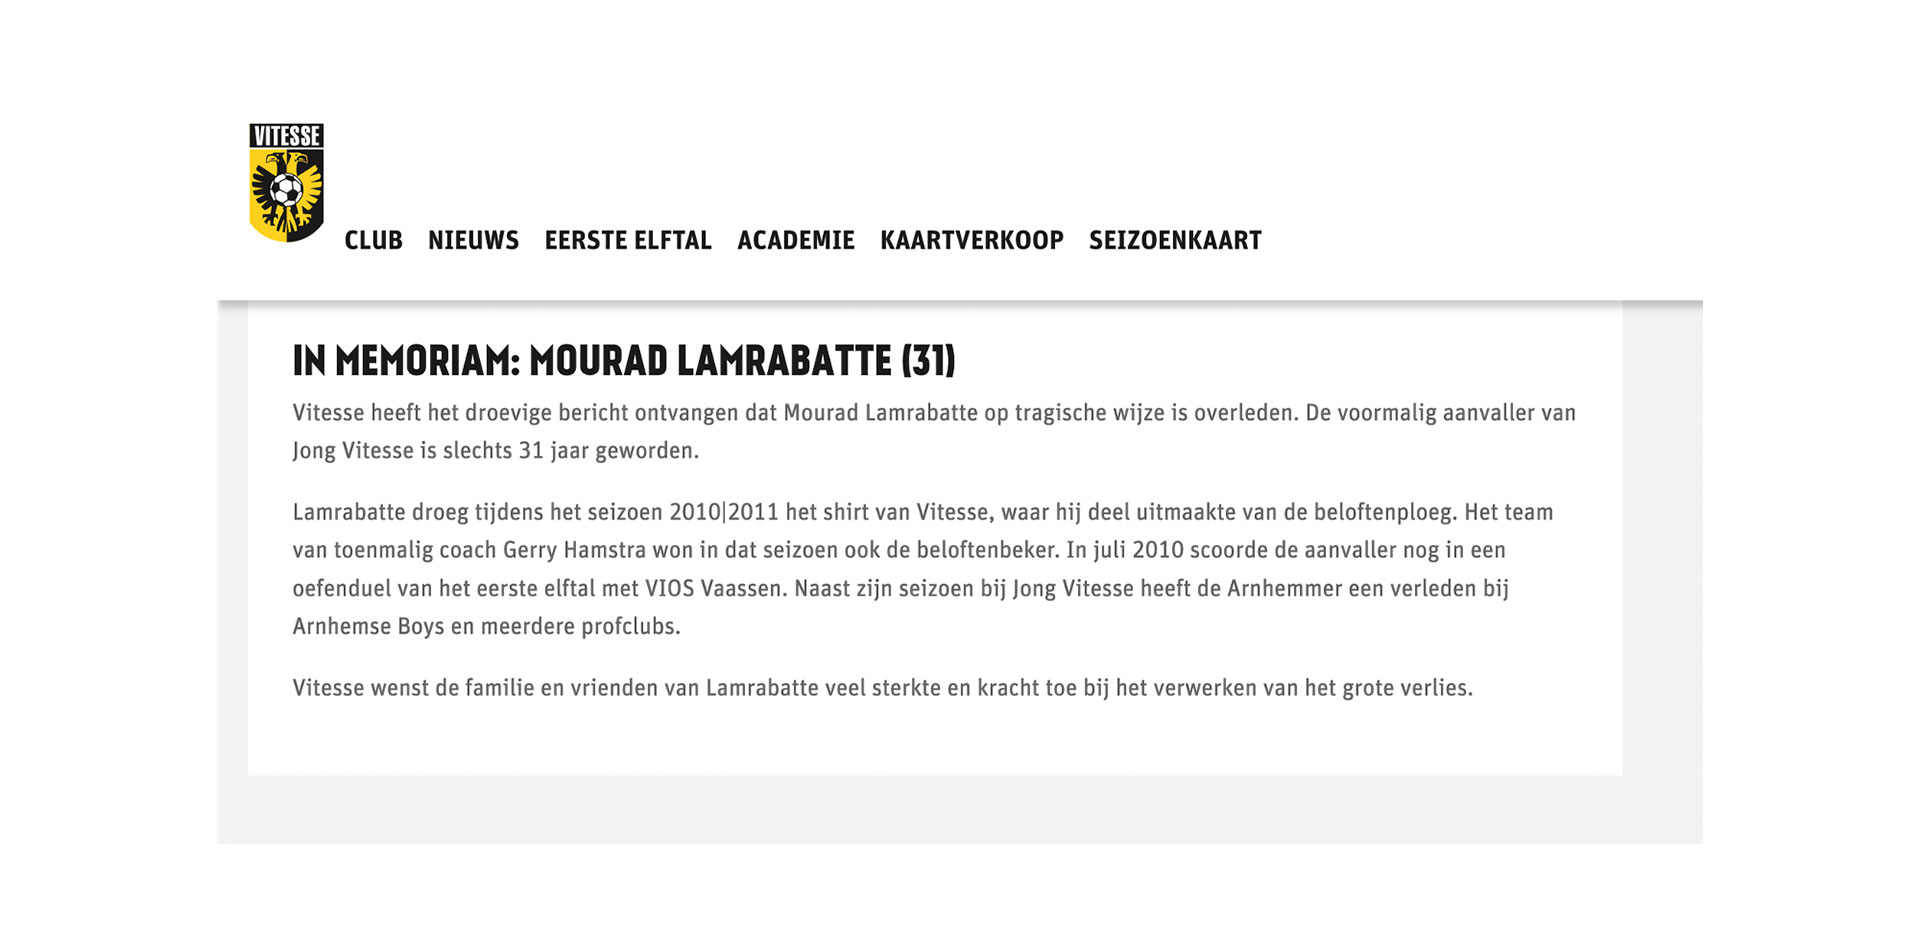 El Vitesse le dedicó un comunicado a Mourad Lambrabatte.